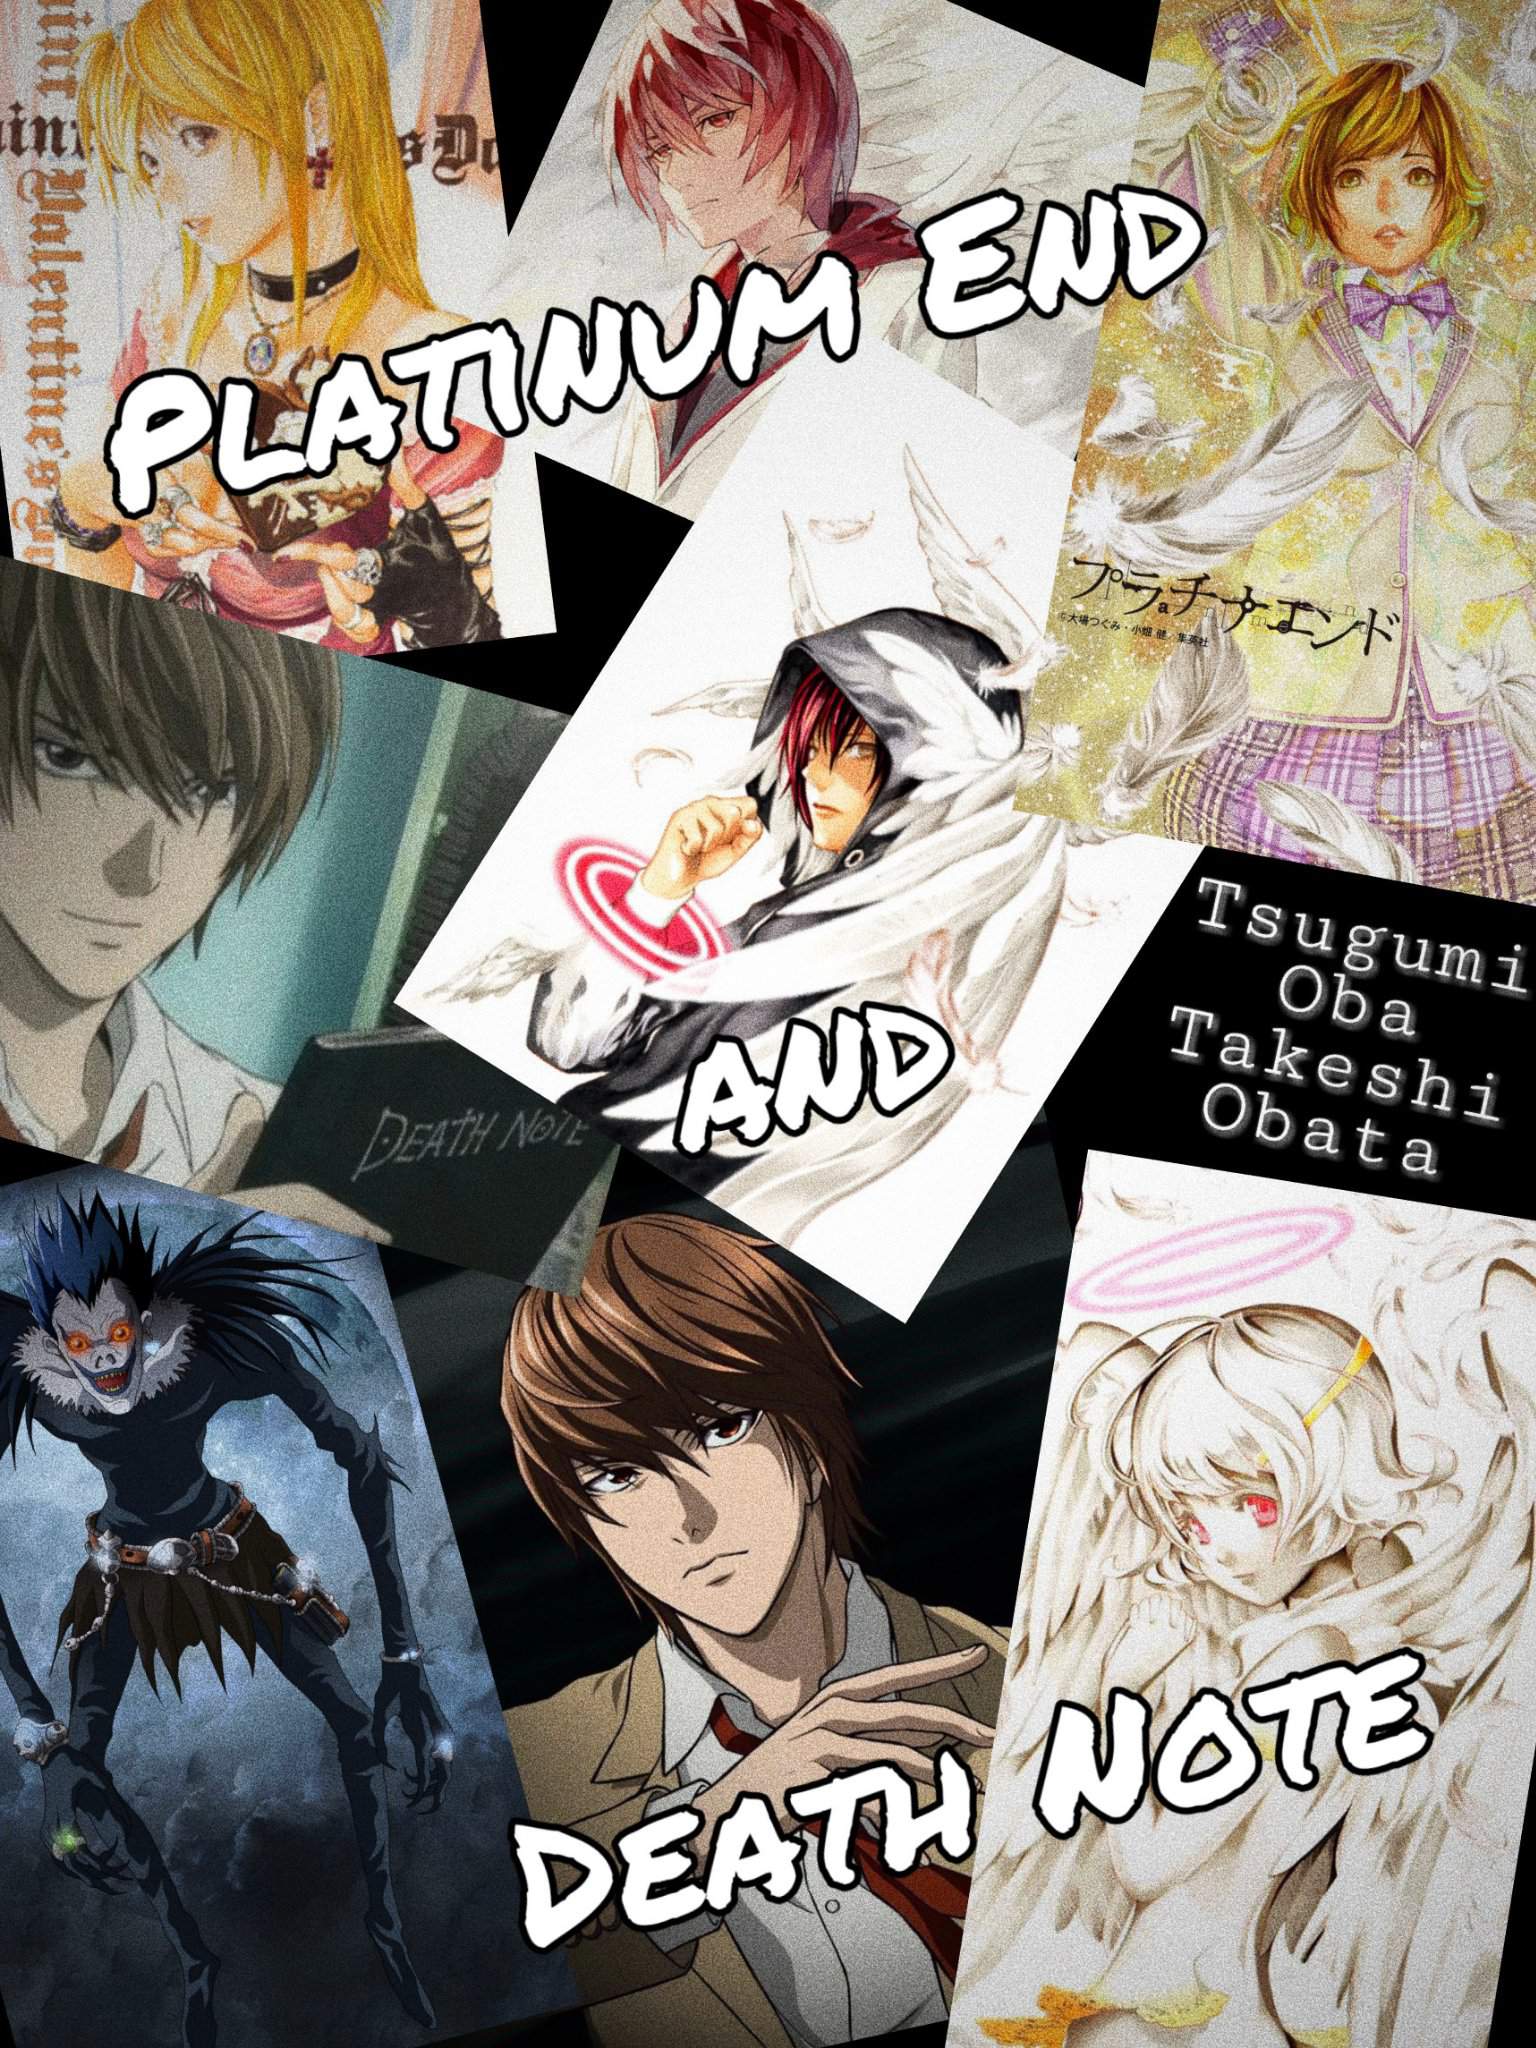 HD Online Player (Death Note Desu Nto Complete Series )